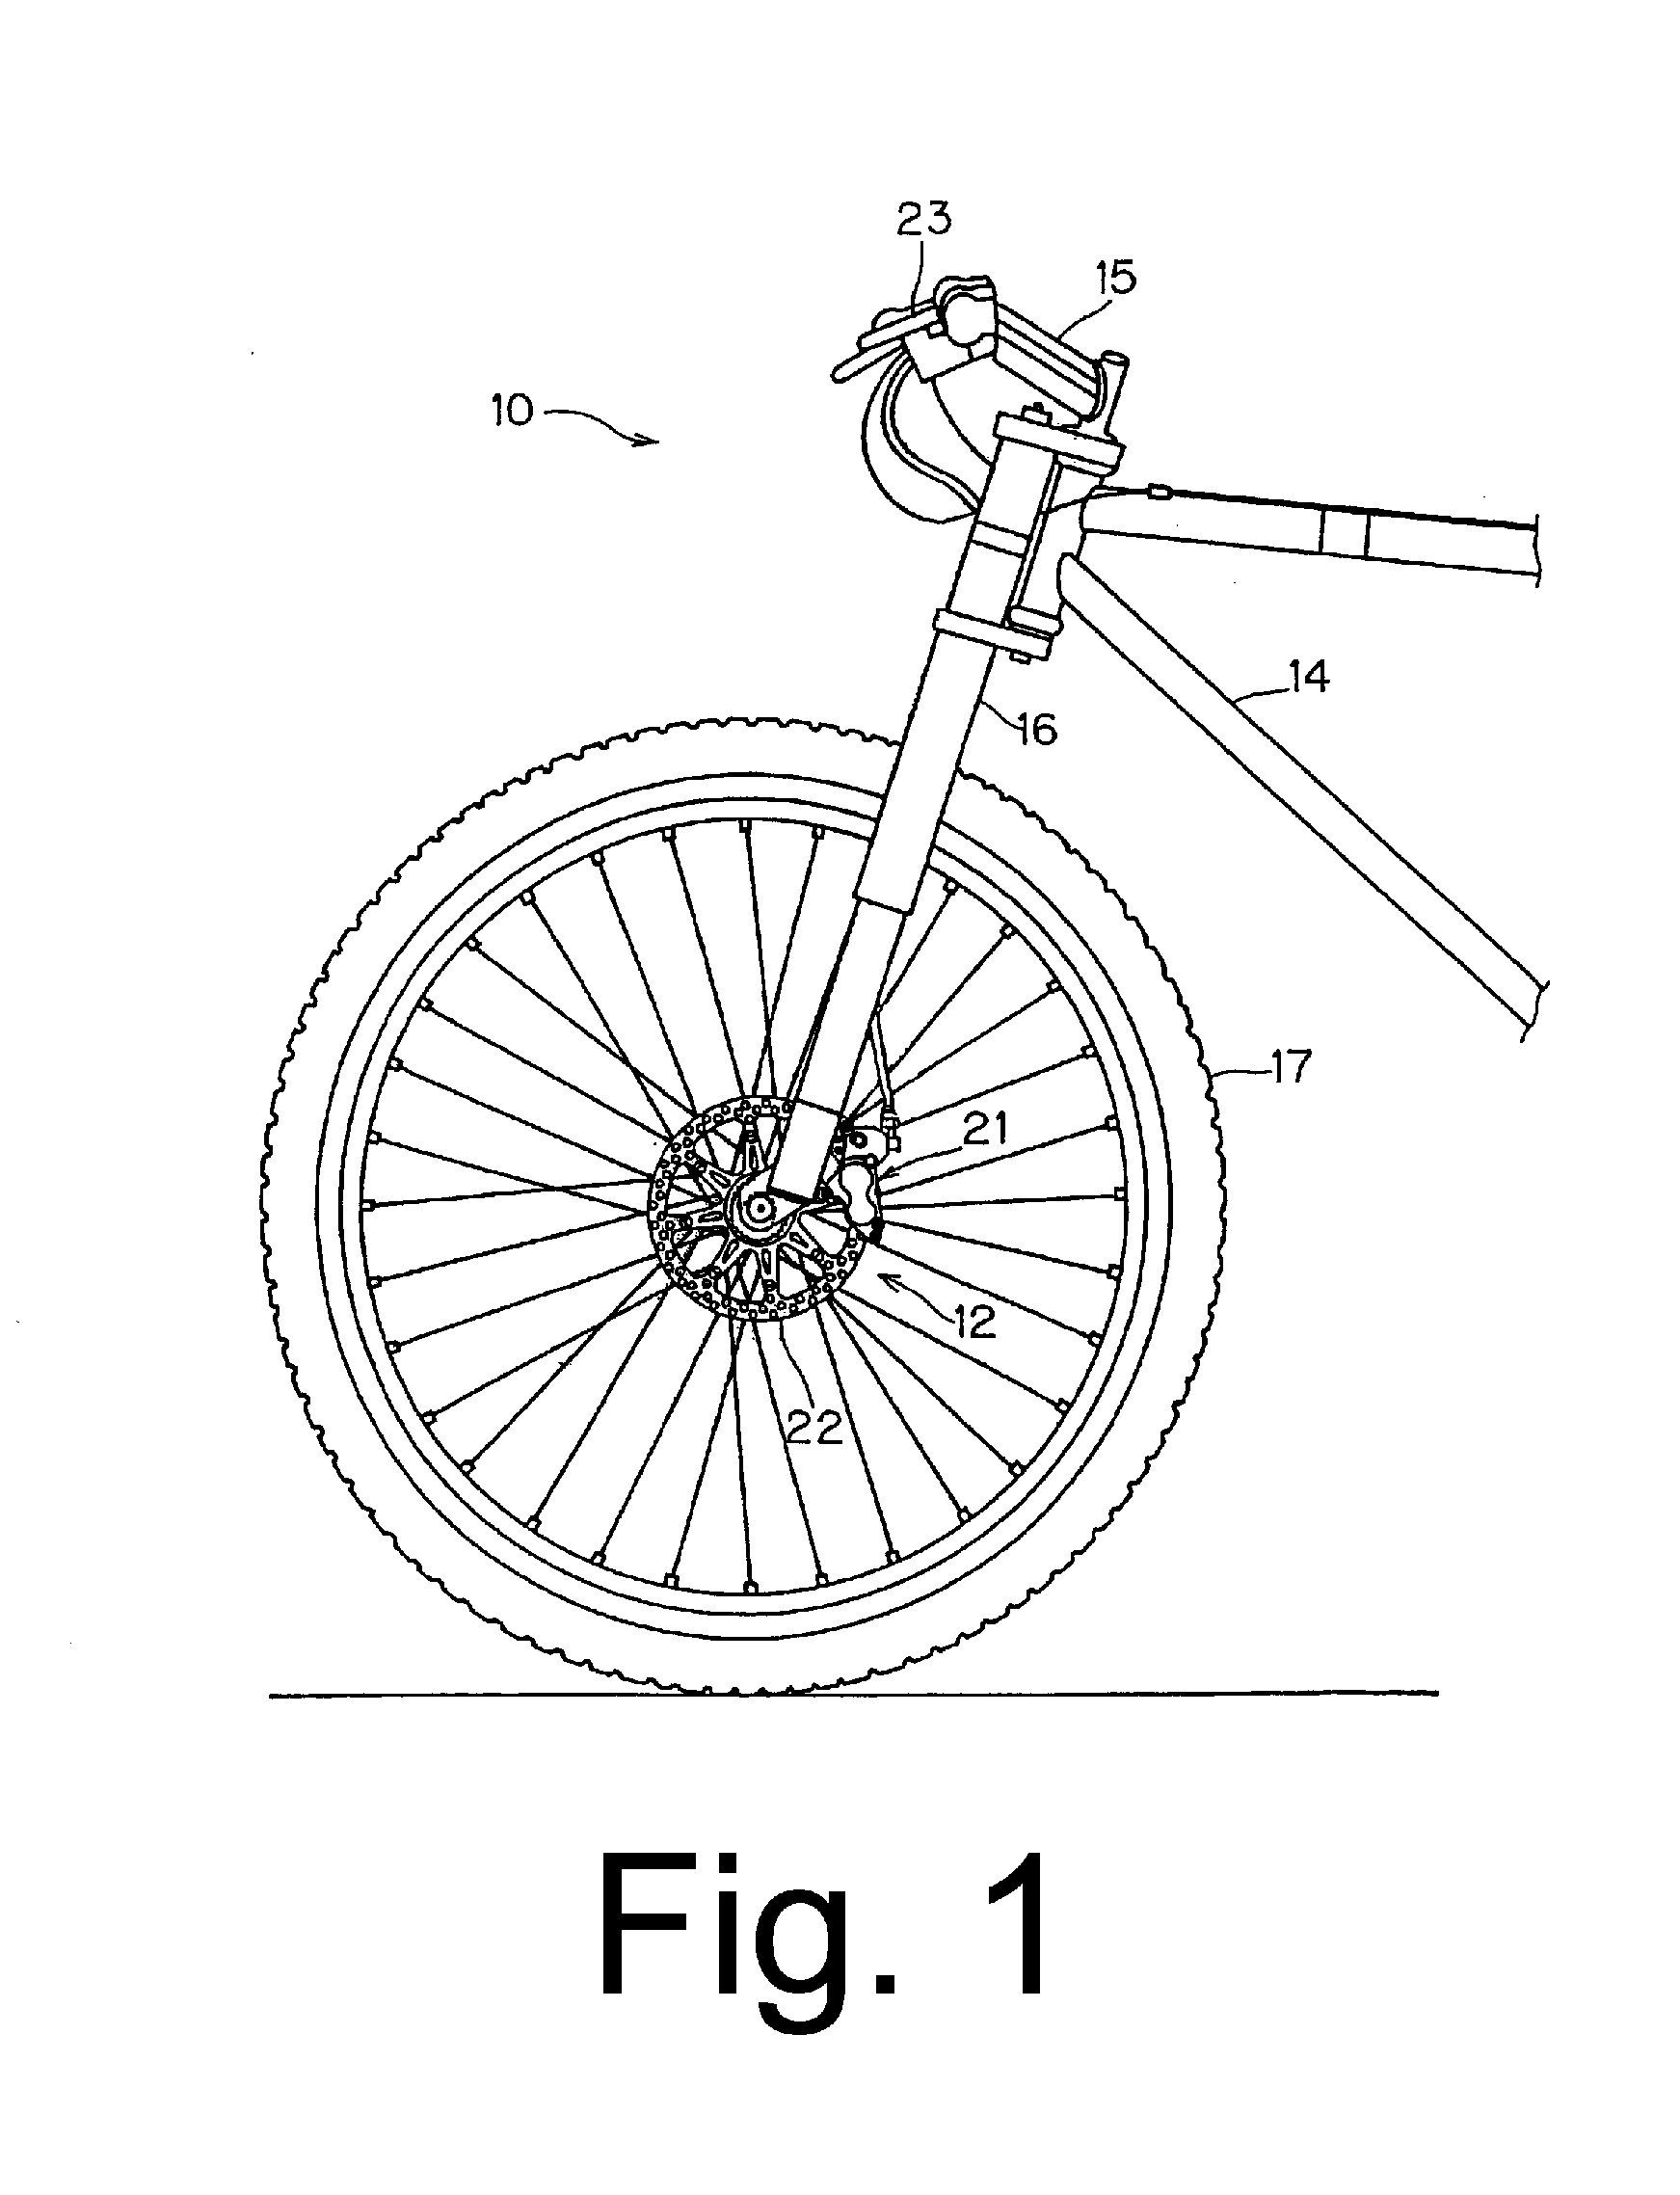 Bicycle disk brake pad with titanium fiber friction material